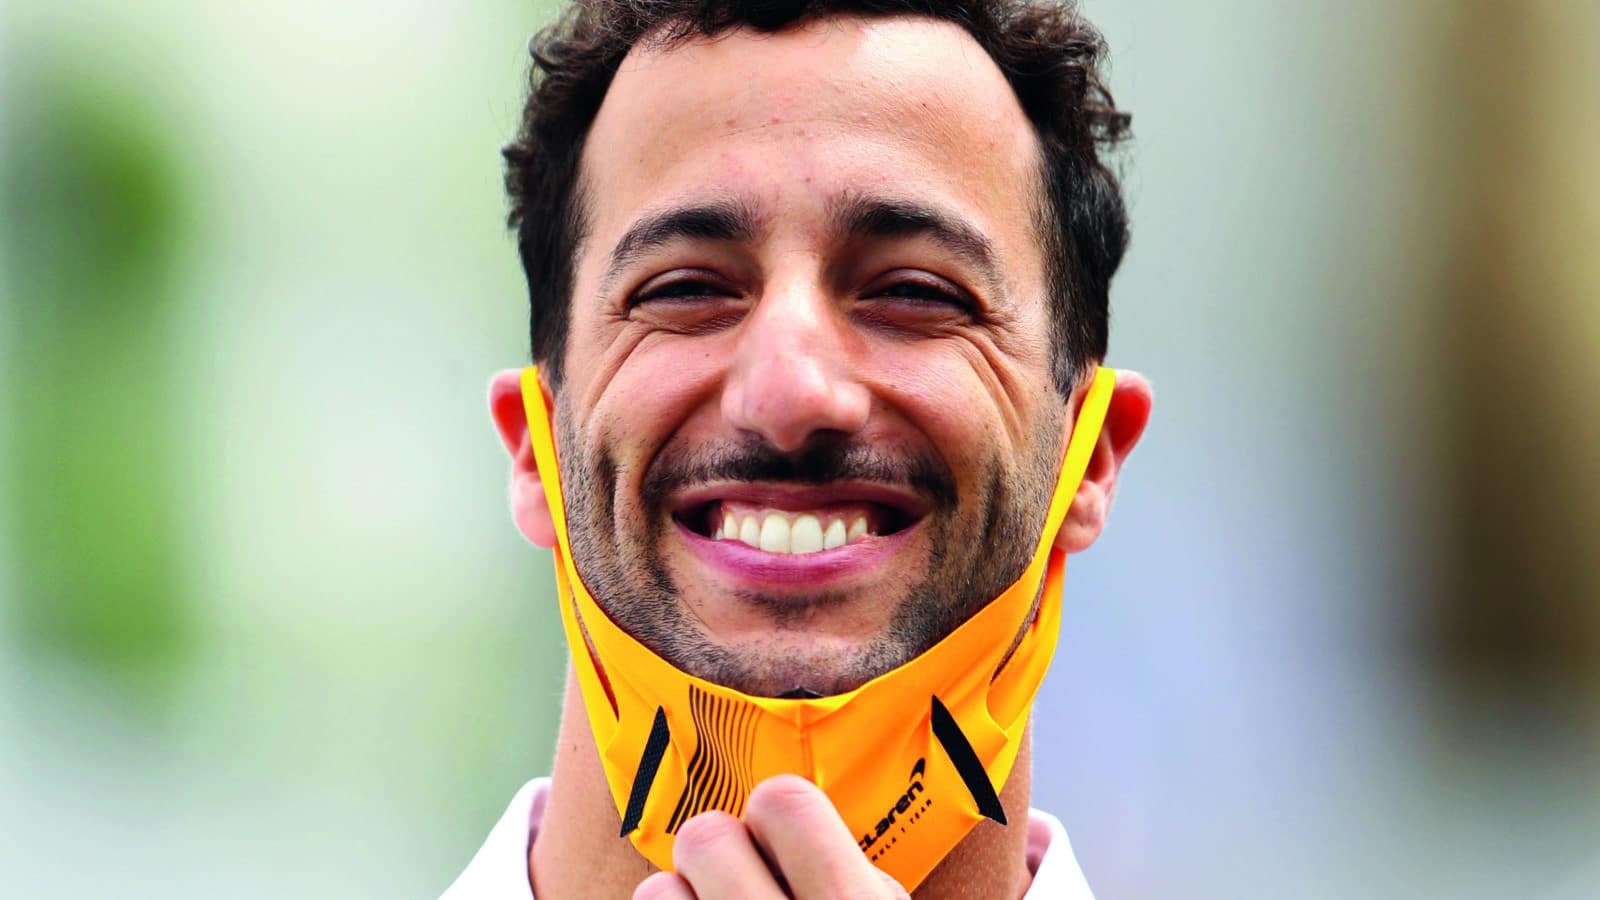 Daniel-Ricciardo-smiling-with-facemask